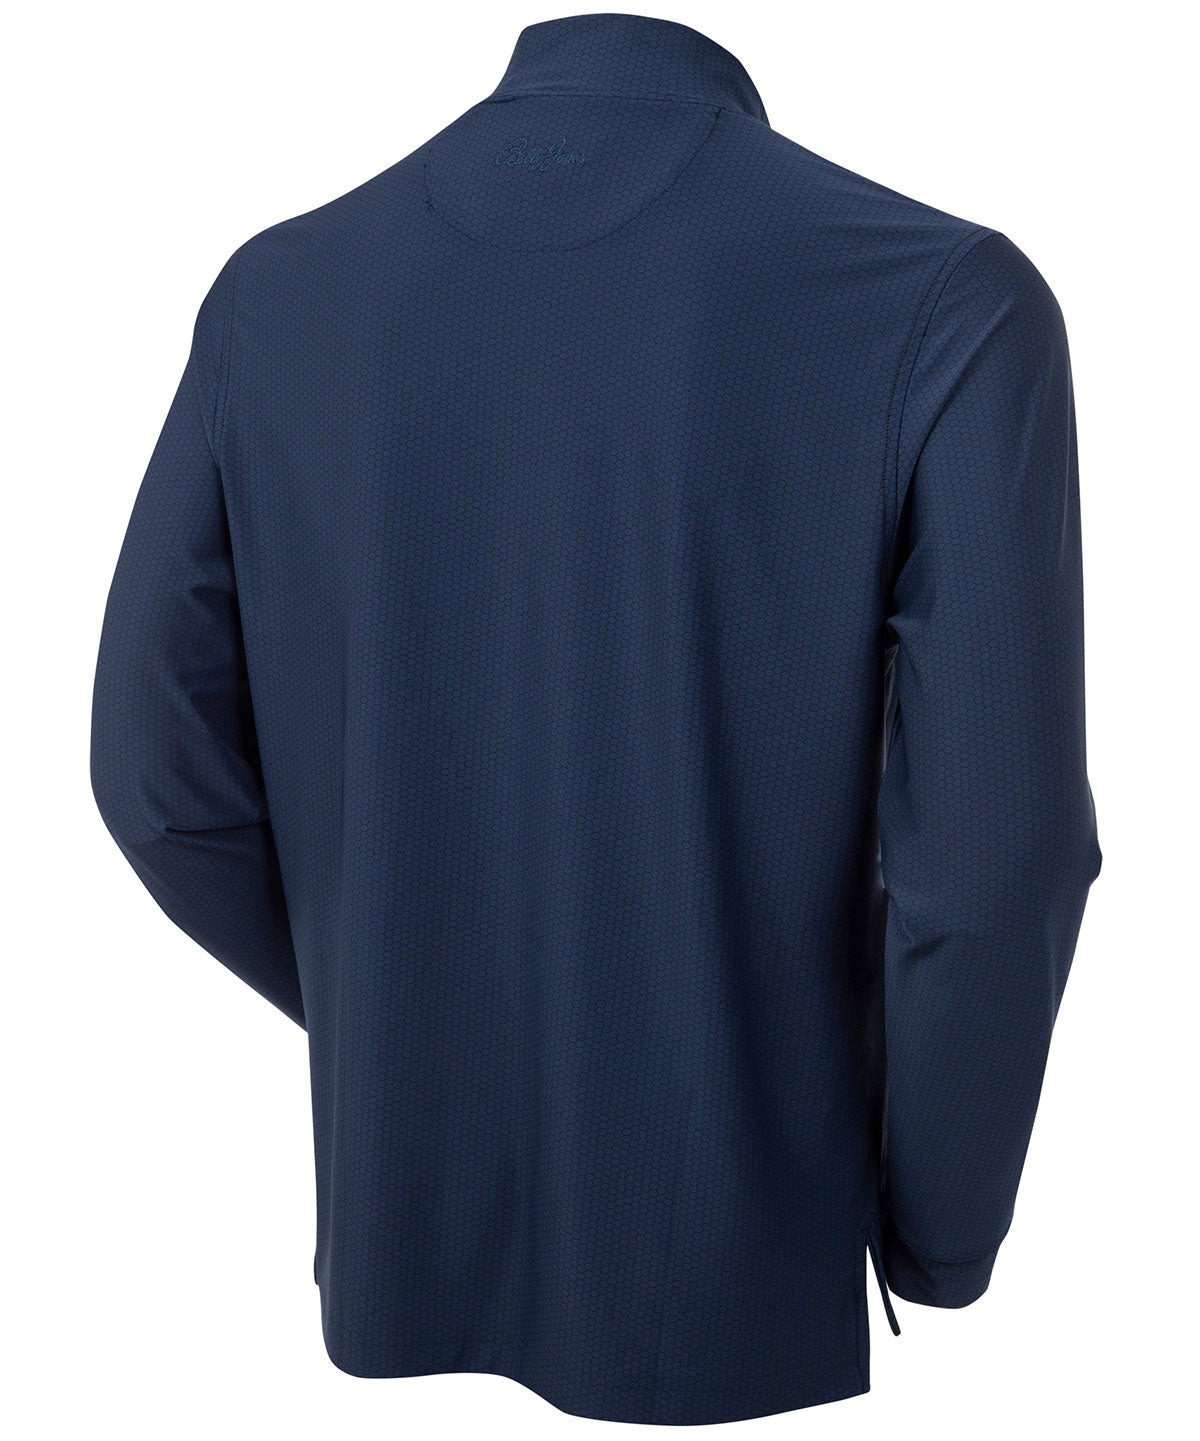 Performance Jersey Balata Long-Sleeve Mock Neck Shirt